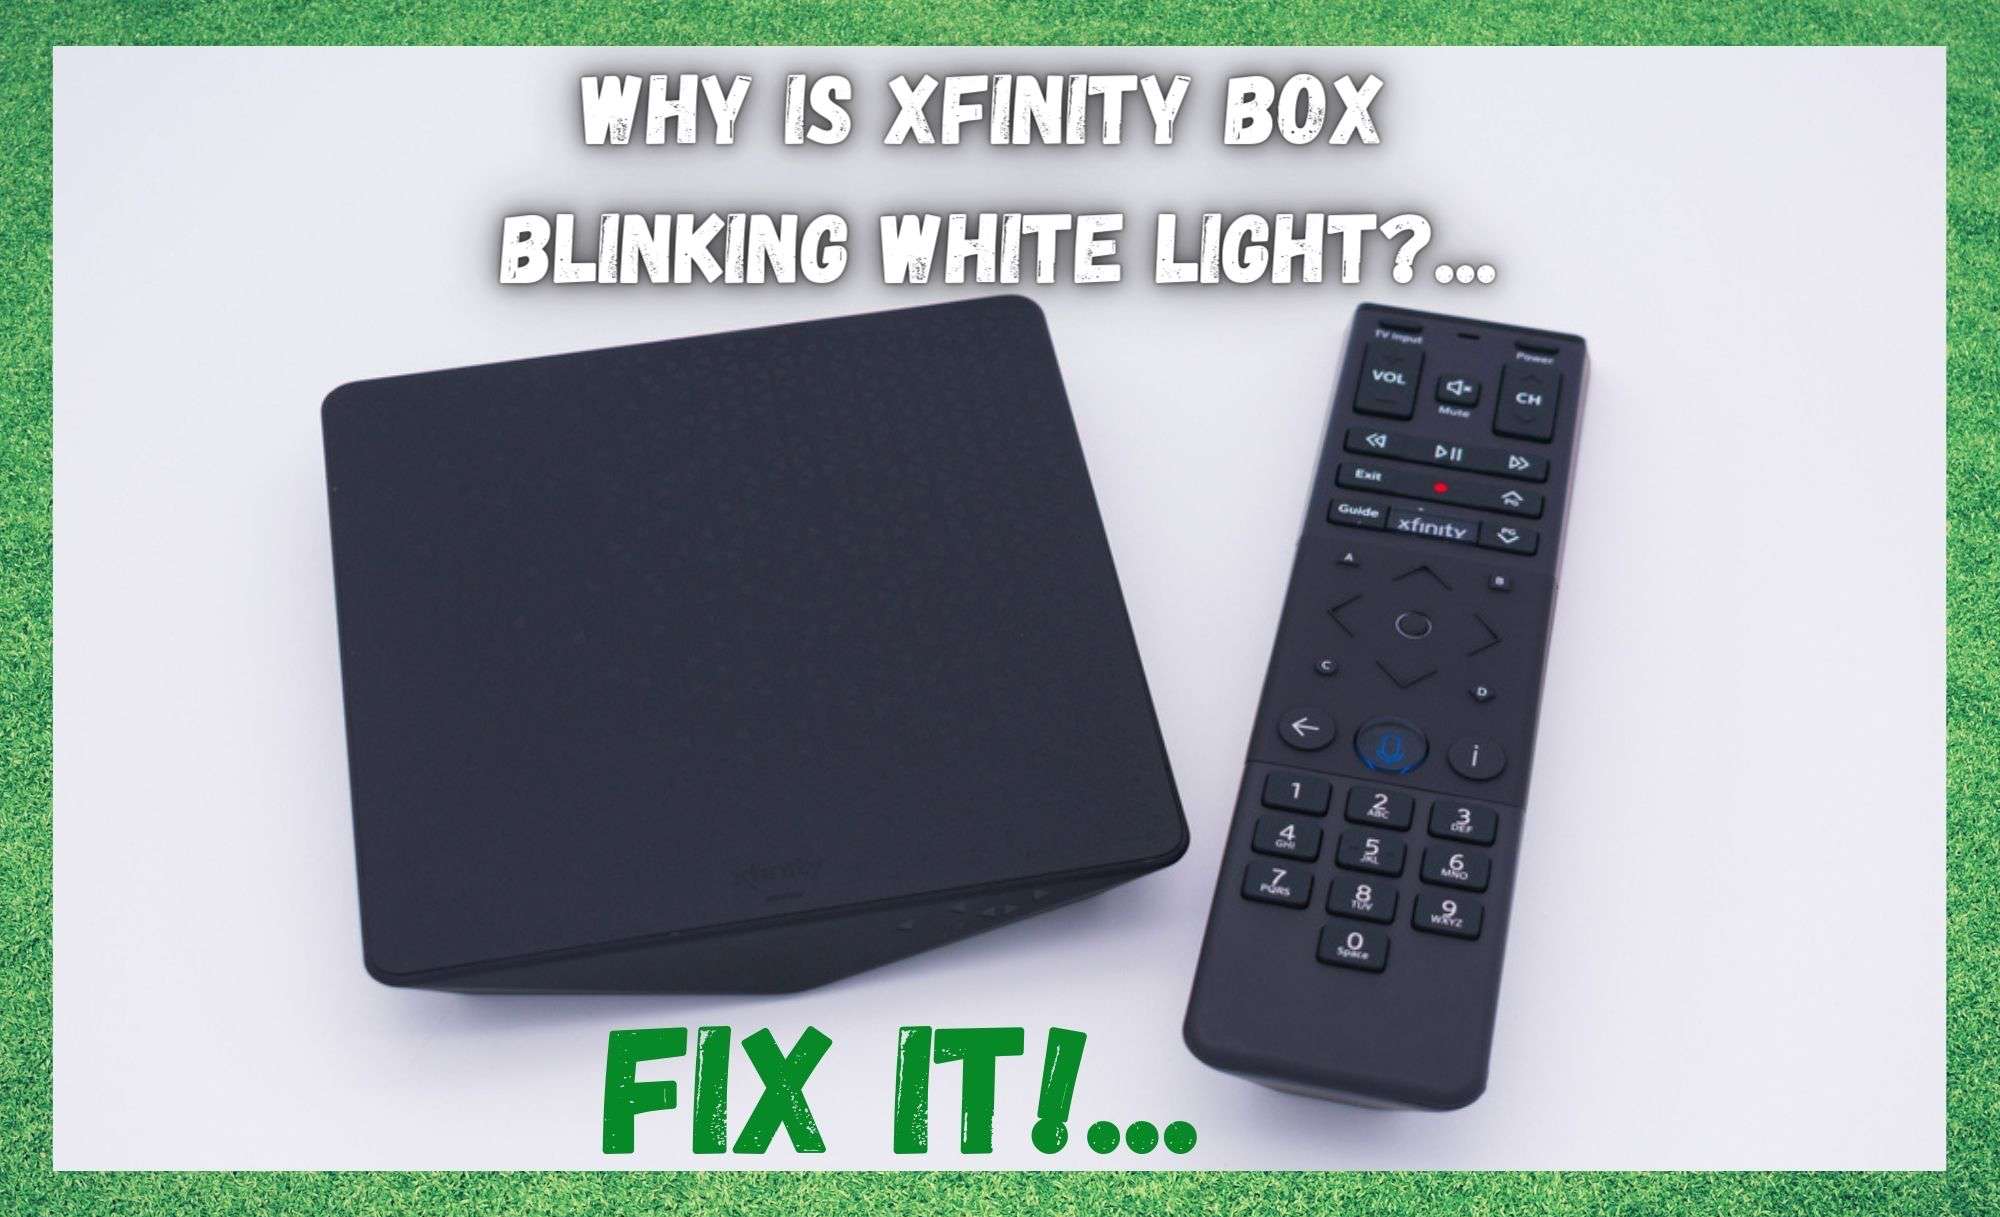 Wêrom blinkt Xfinity Box wyt ljocht? 4 Fixes